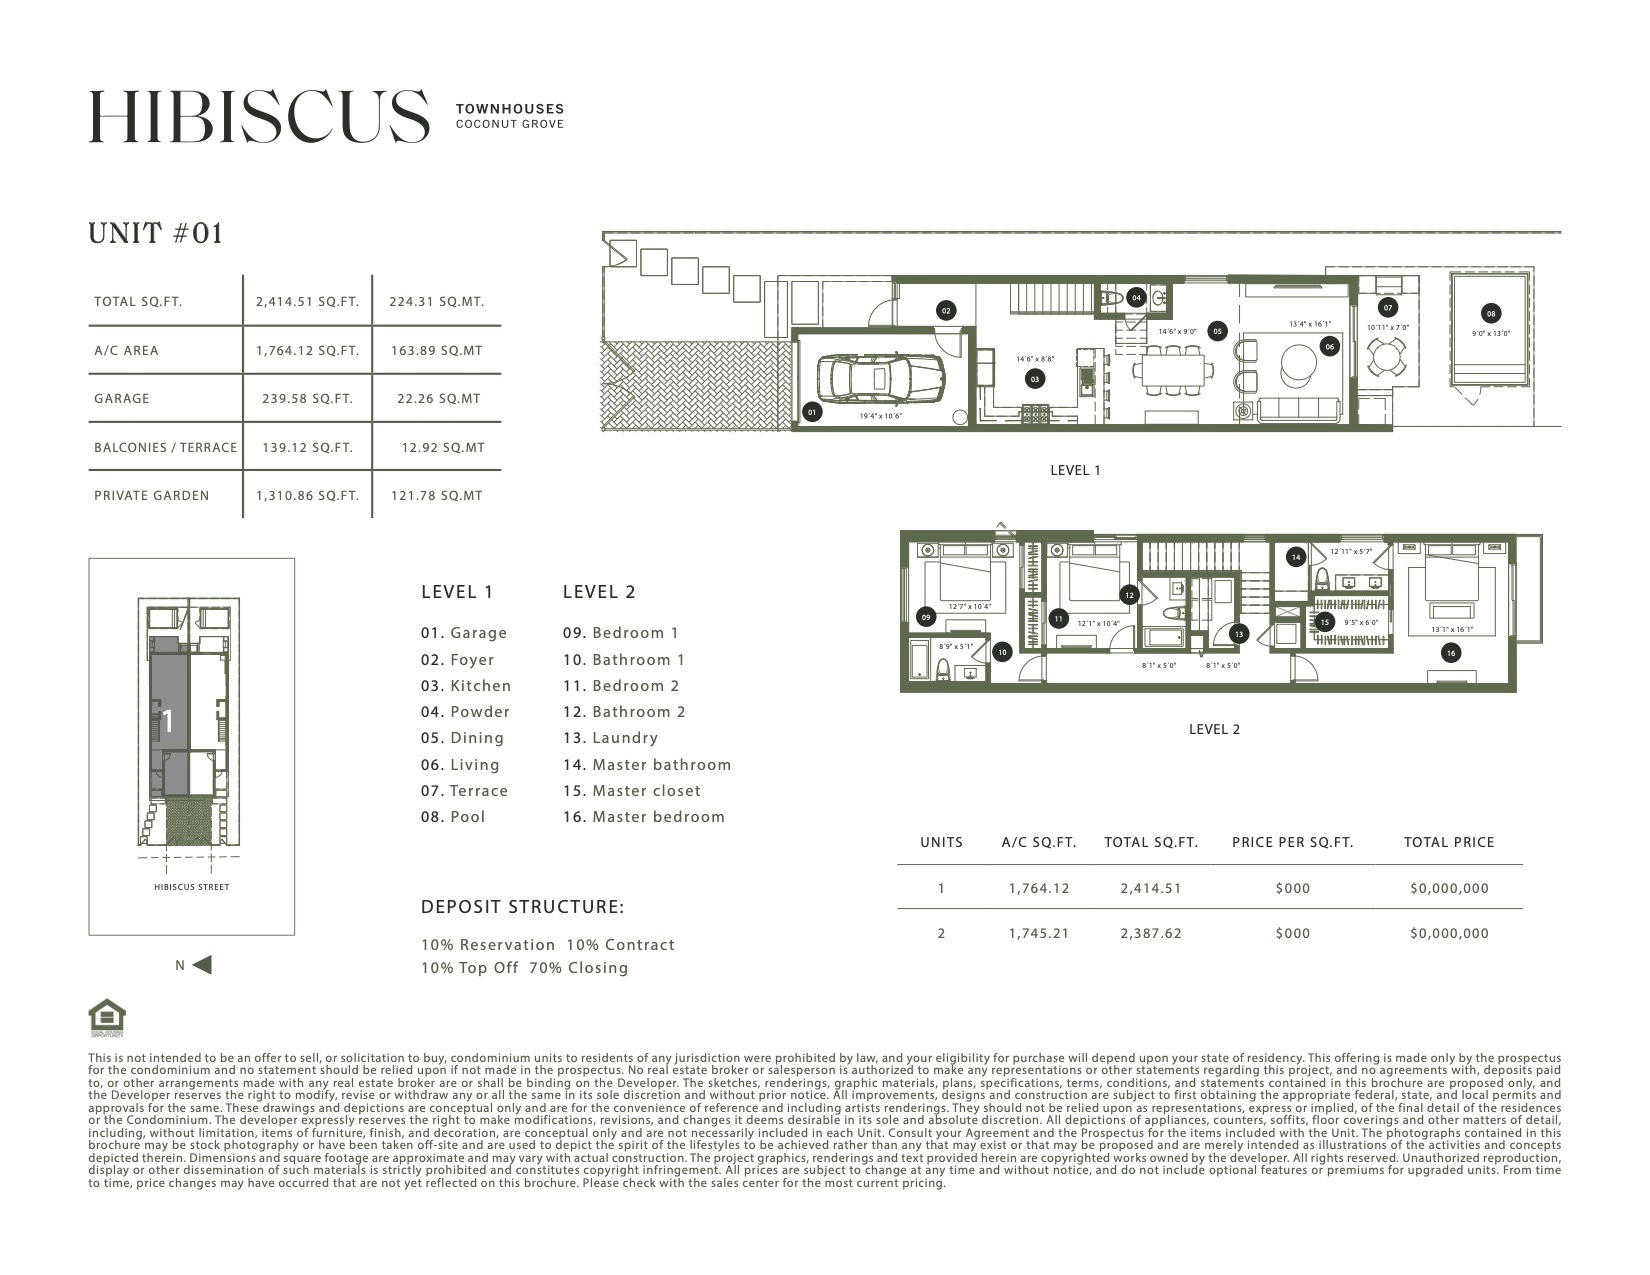 Floor Plan for Hibiscus Townhomes Coconut Grove Floorplans, Unit 1